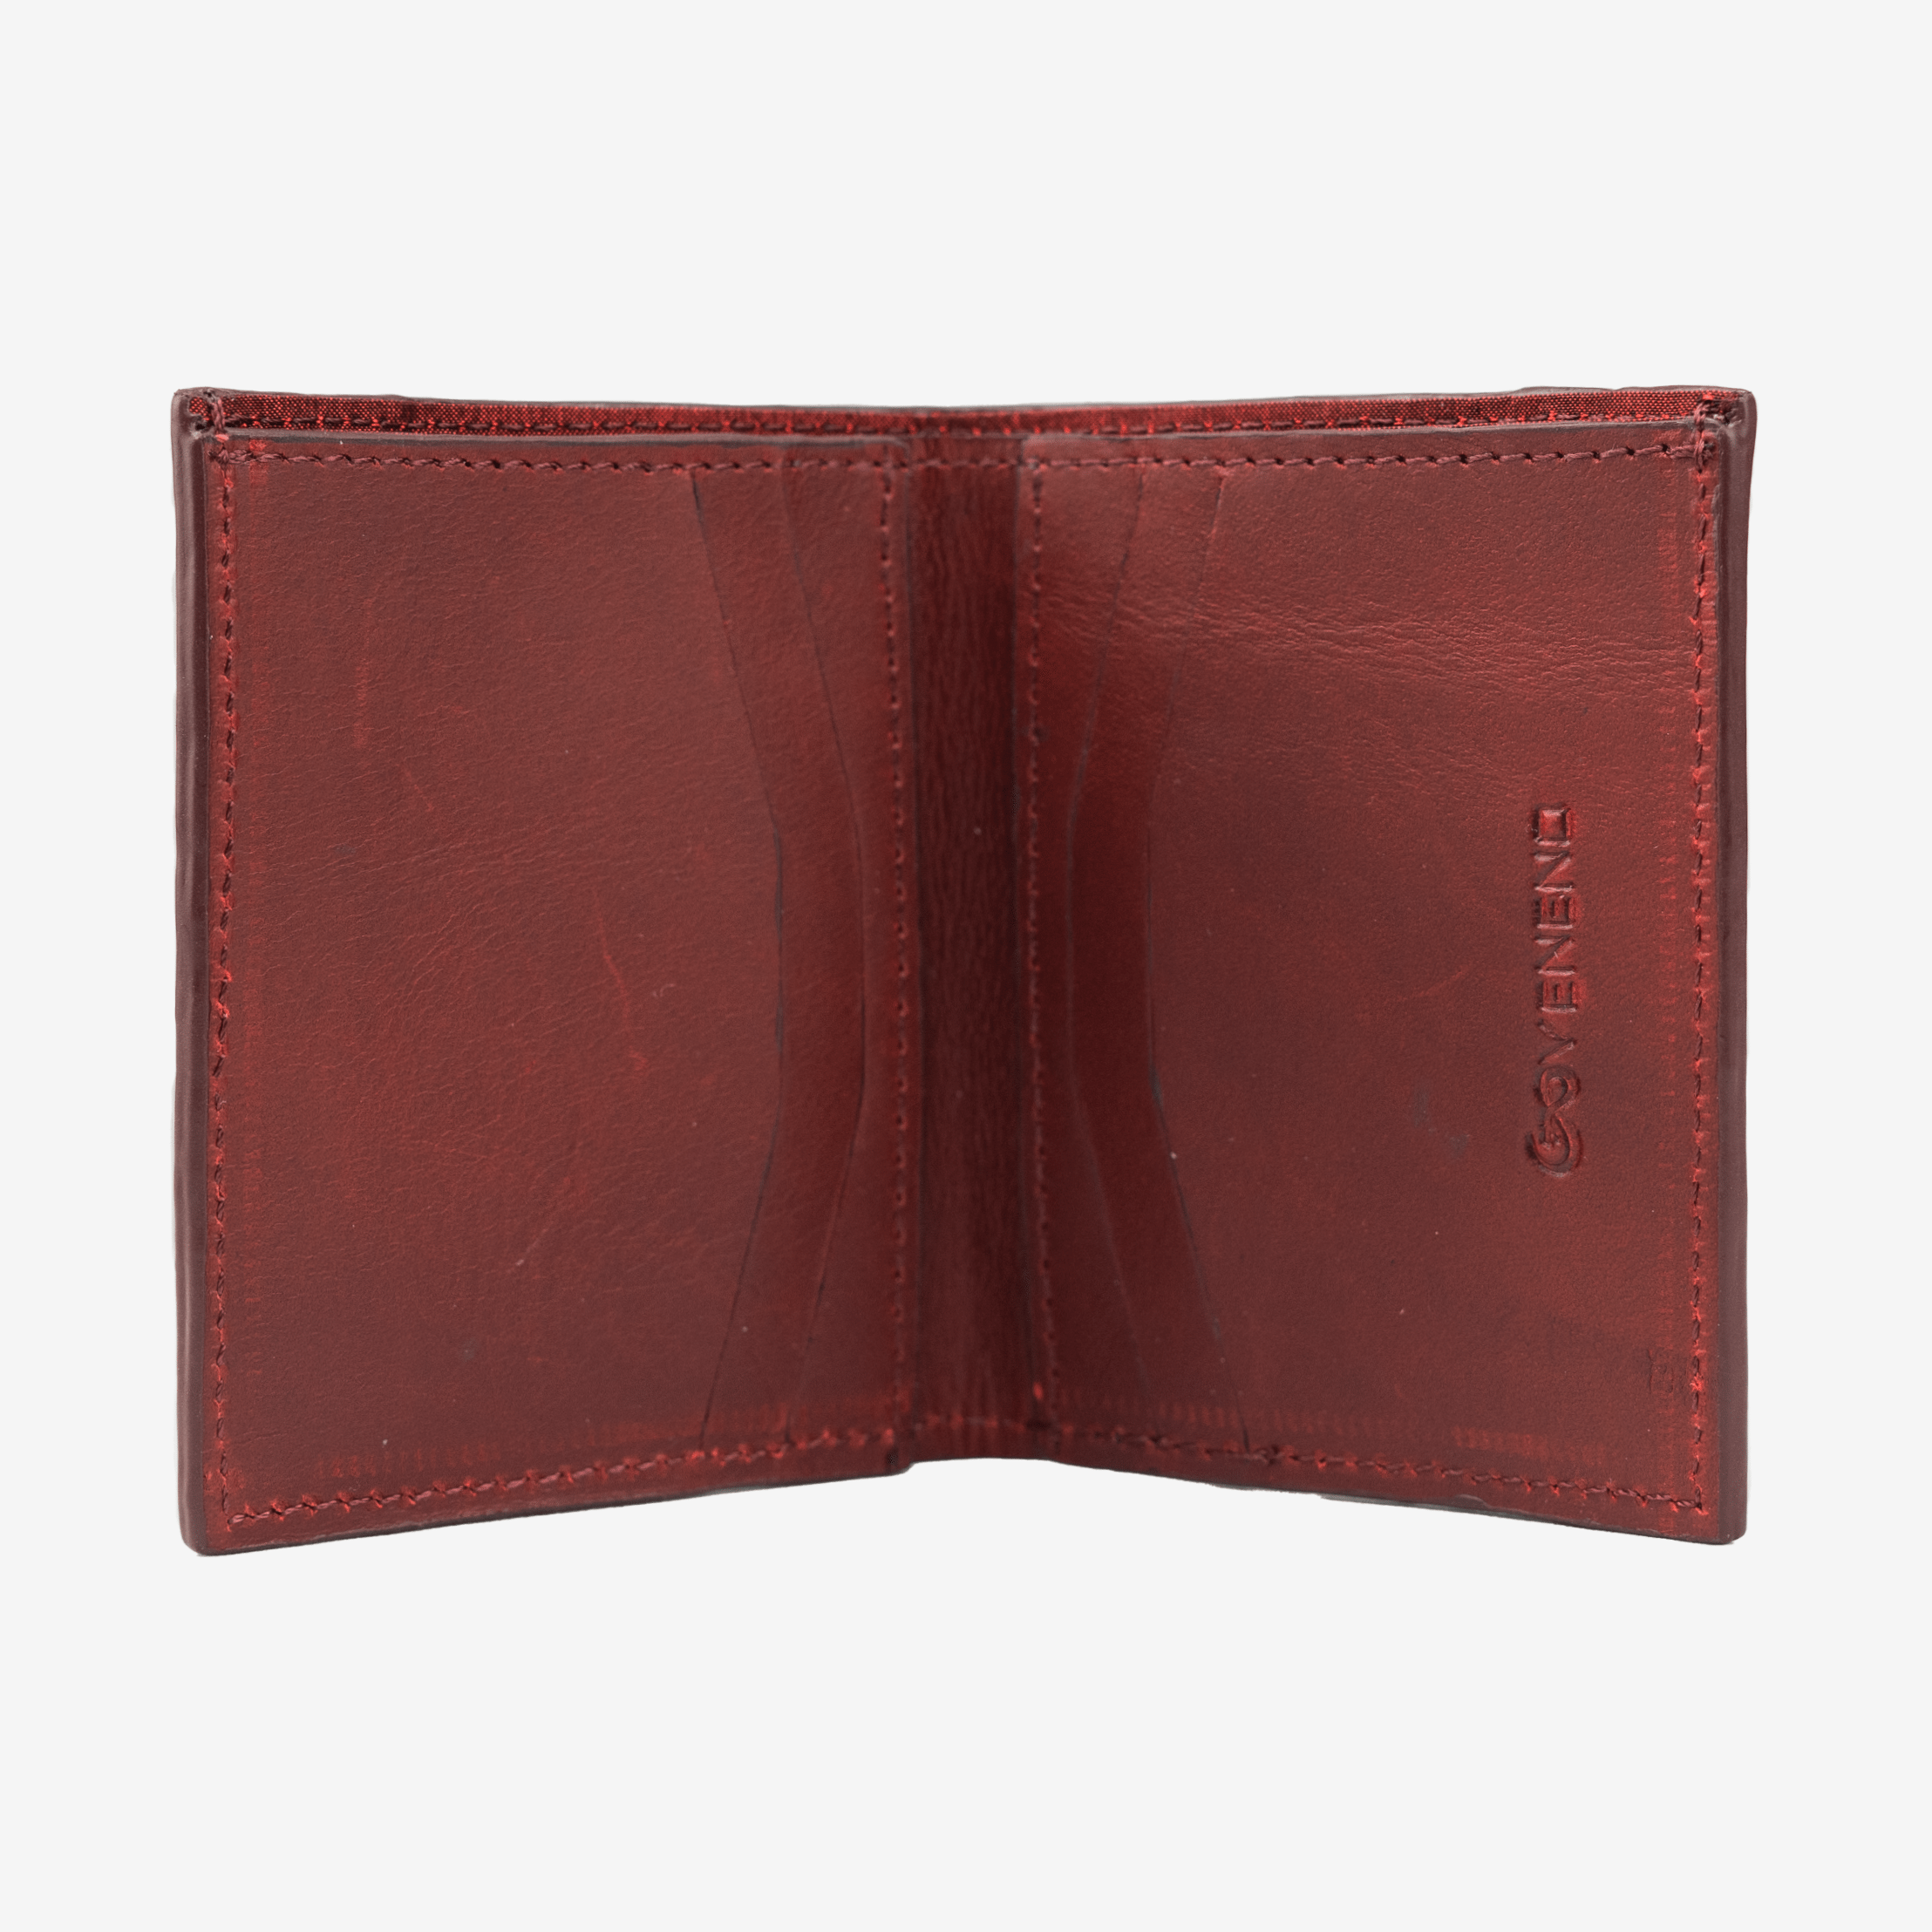 Veneno Leather Goods Cartera Compacta "The TIE" Red